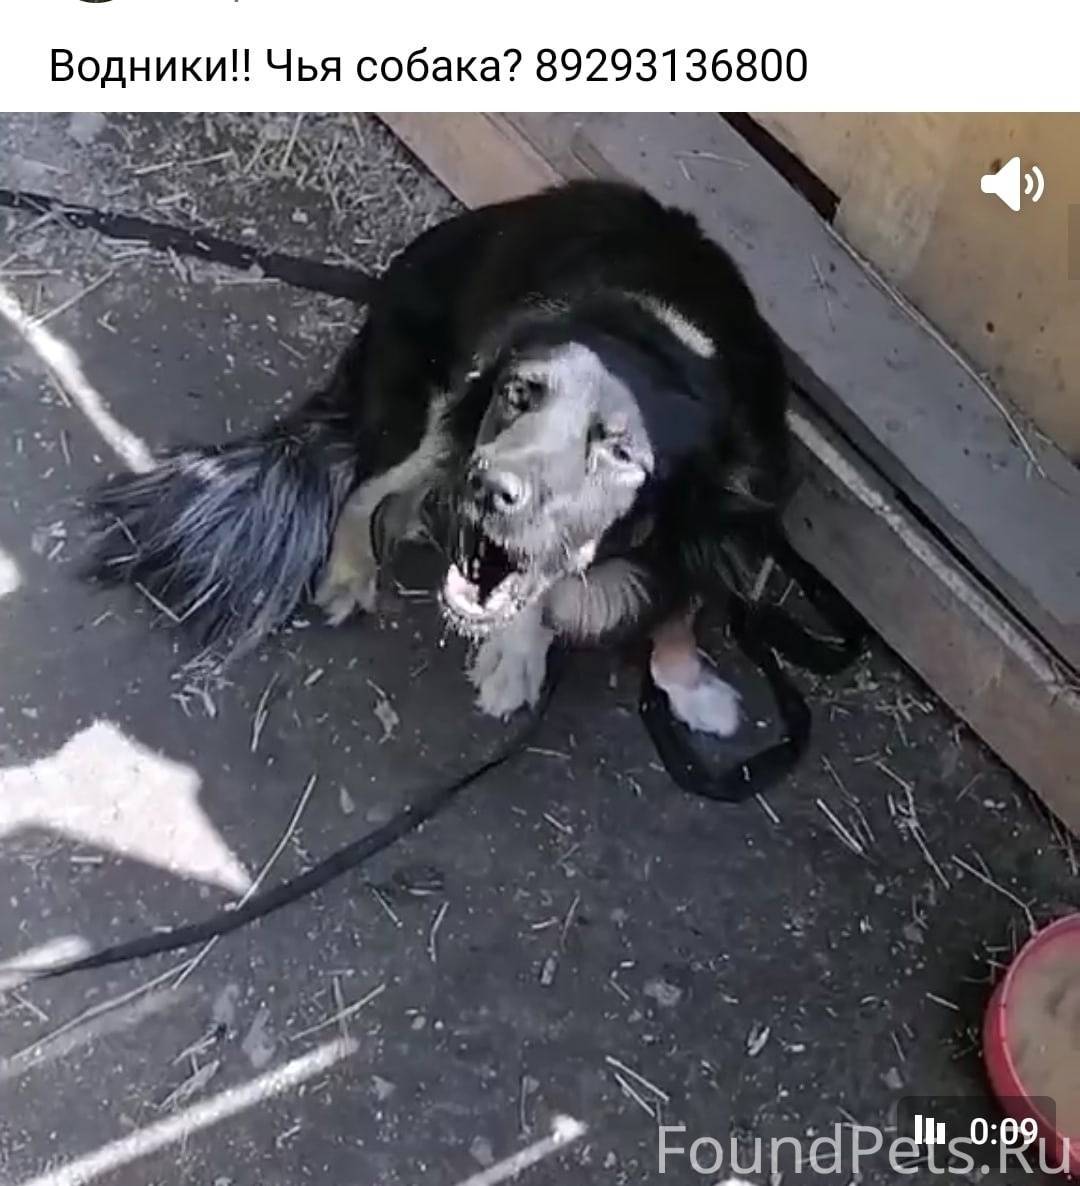 Найдена собака в районе Водник...